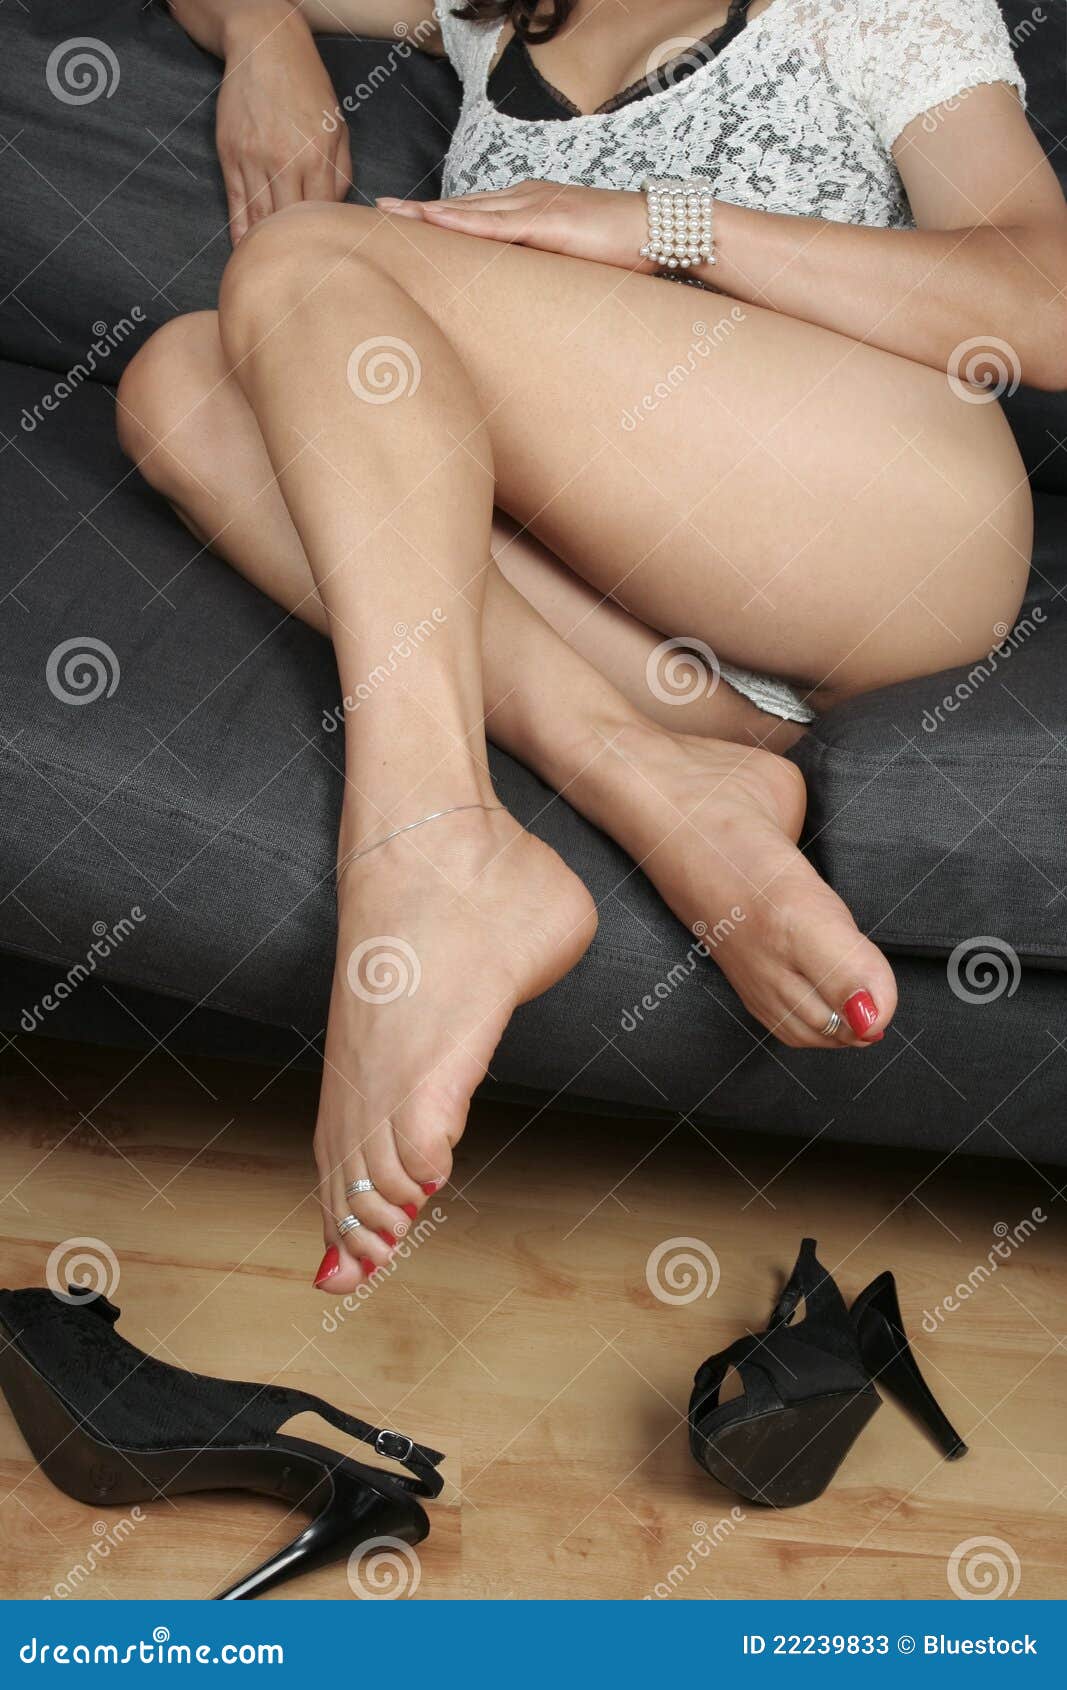 dennie boen add beautiful women with great legs photo